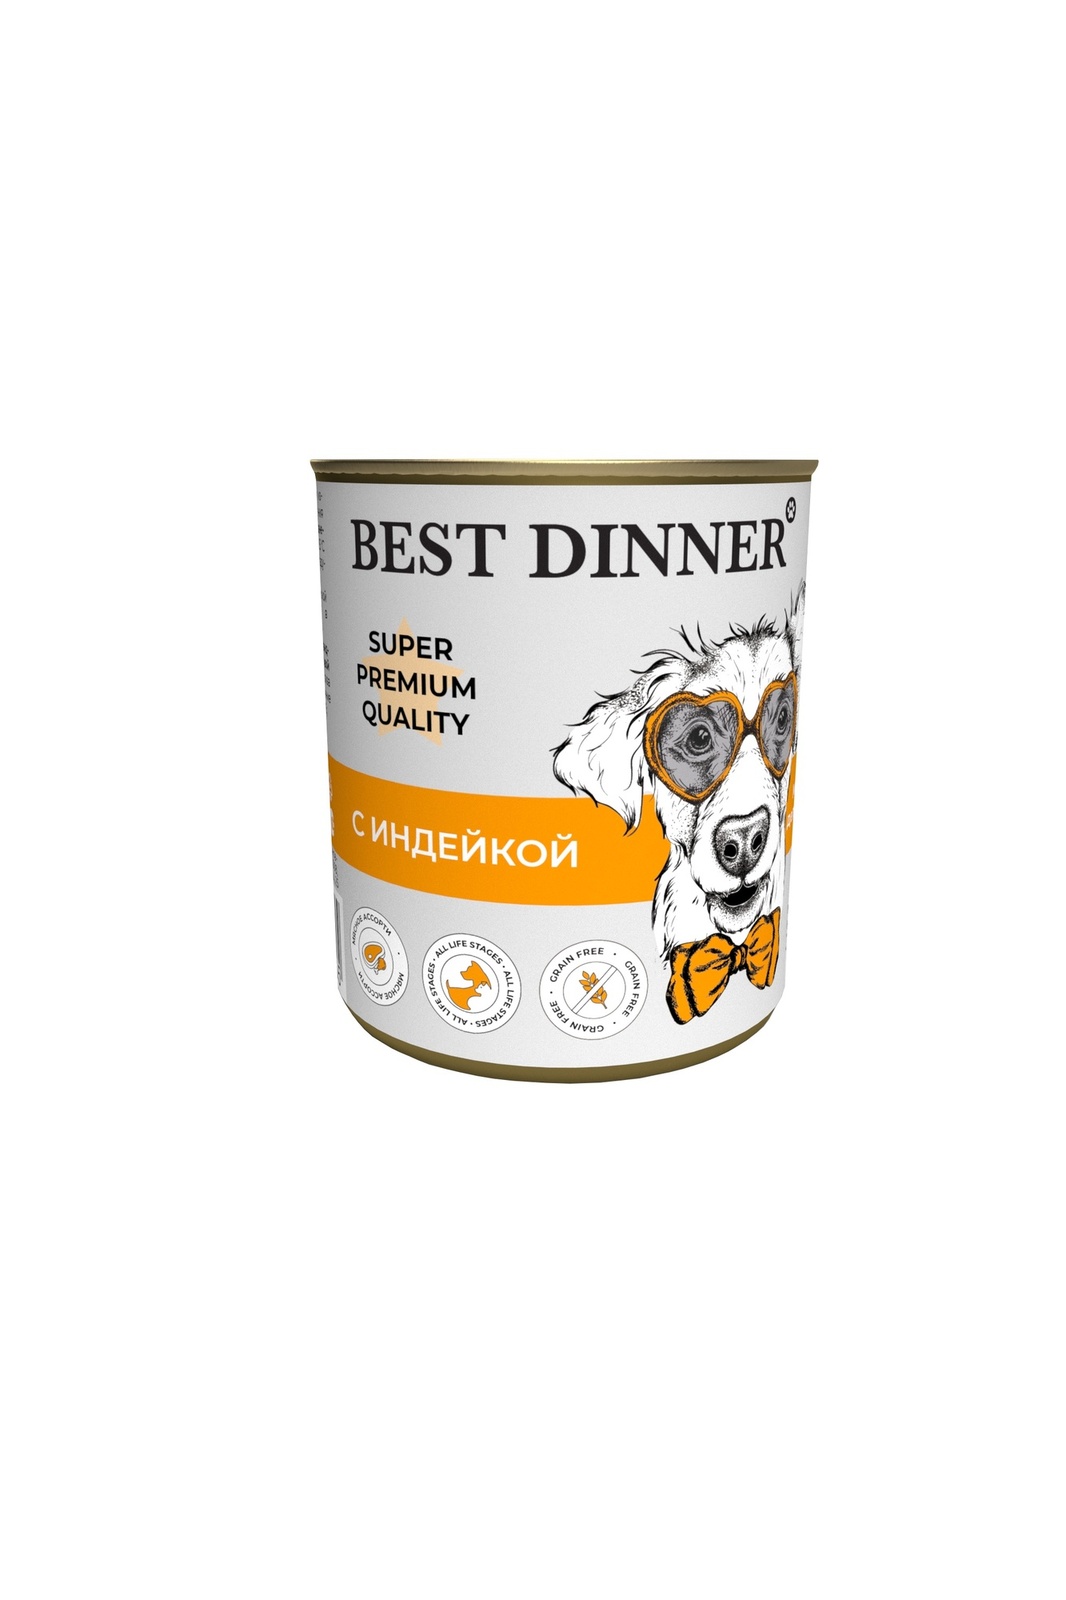 Best Dinner Best Dinner консервы для собак Super Premium С индейкой (340 г) best dinner best dinner консервы для собак super premium с перепелкой 340 г